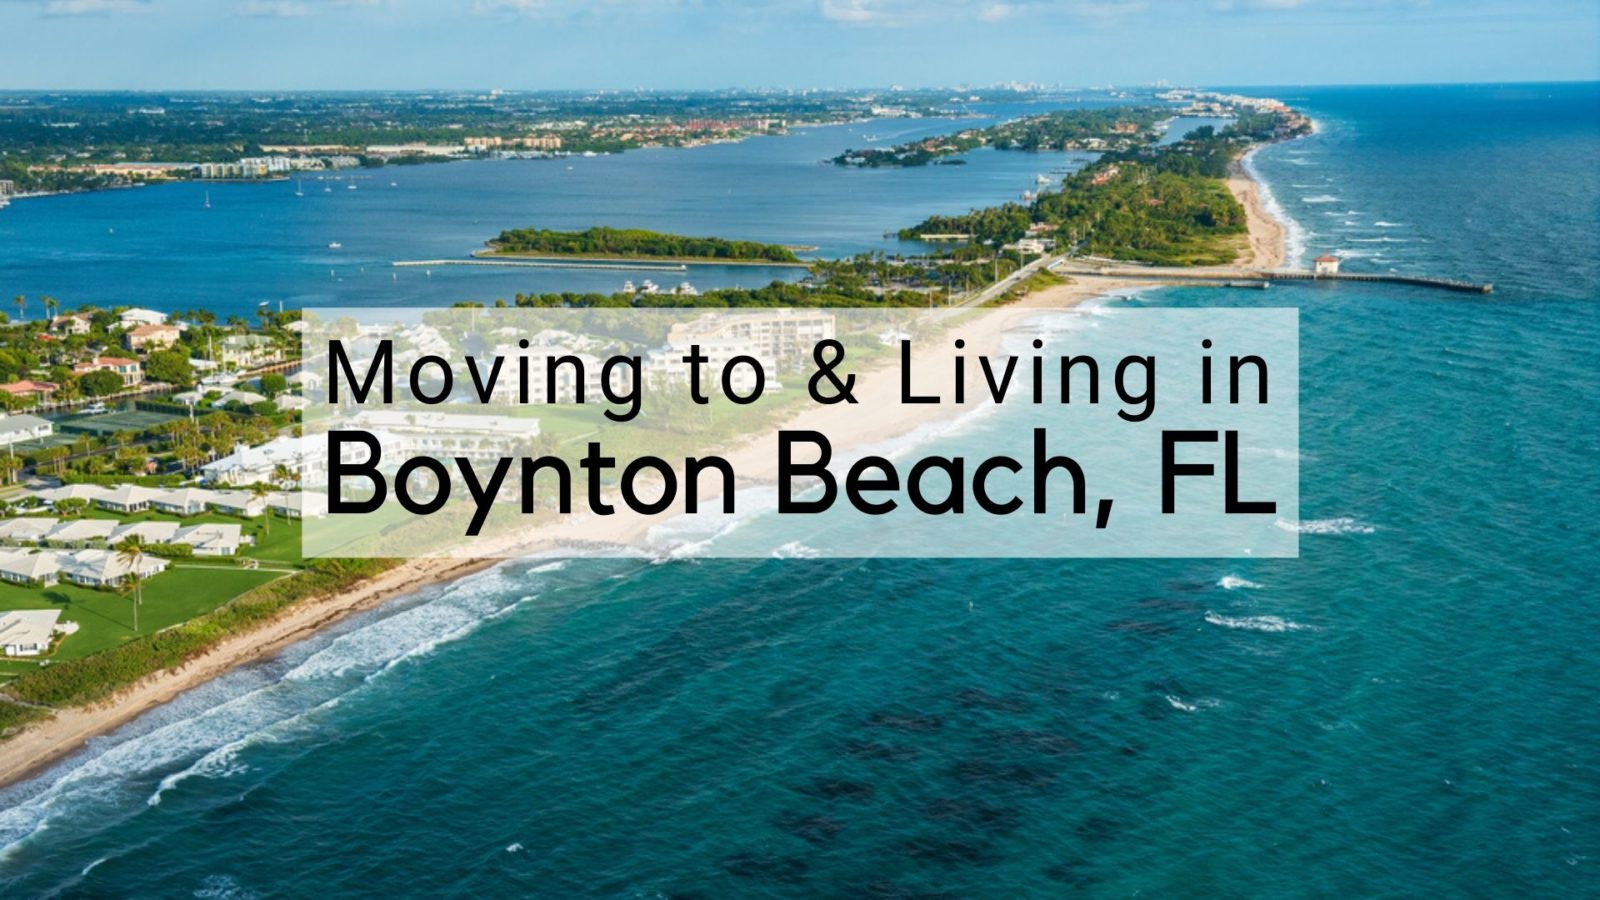 bappaditya banerjee recommends Backpage Boynton Beach Florida